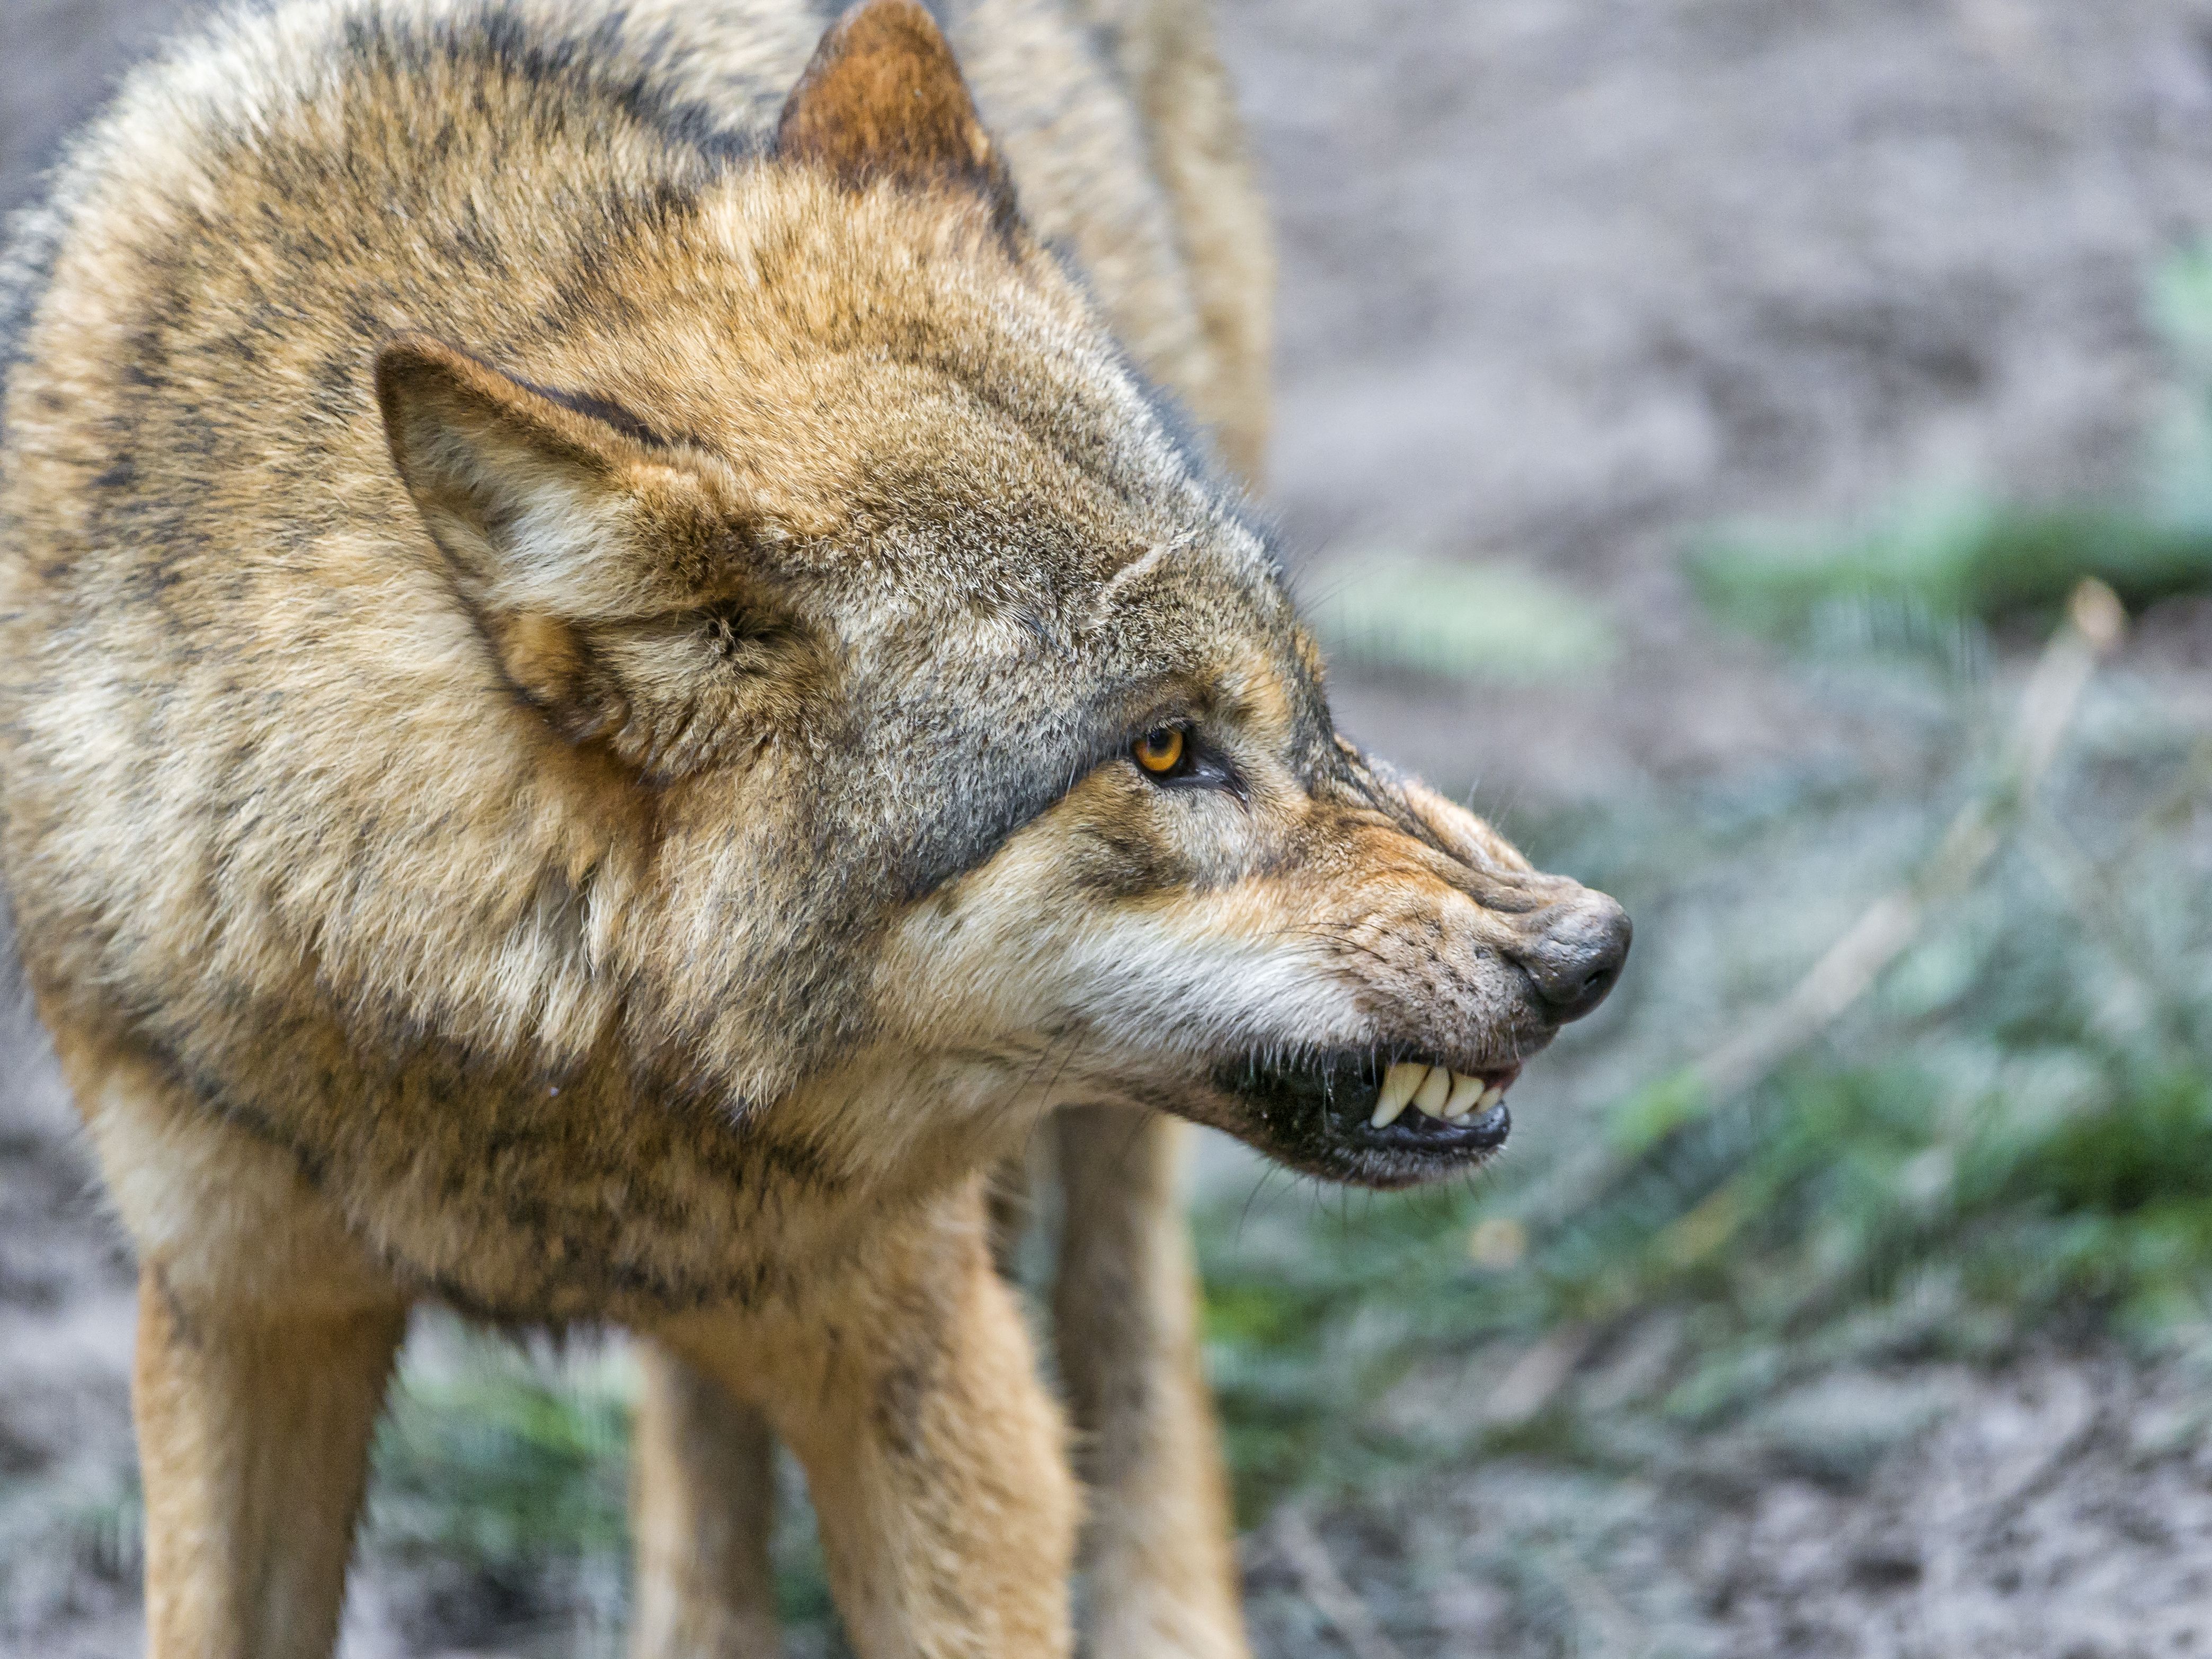 Descarga gratuita de fondo de pantalla para móvil de Animales, Lobo, Gruñido, Wolves.